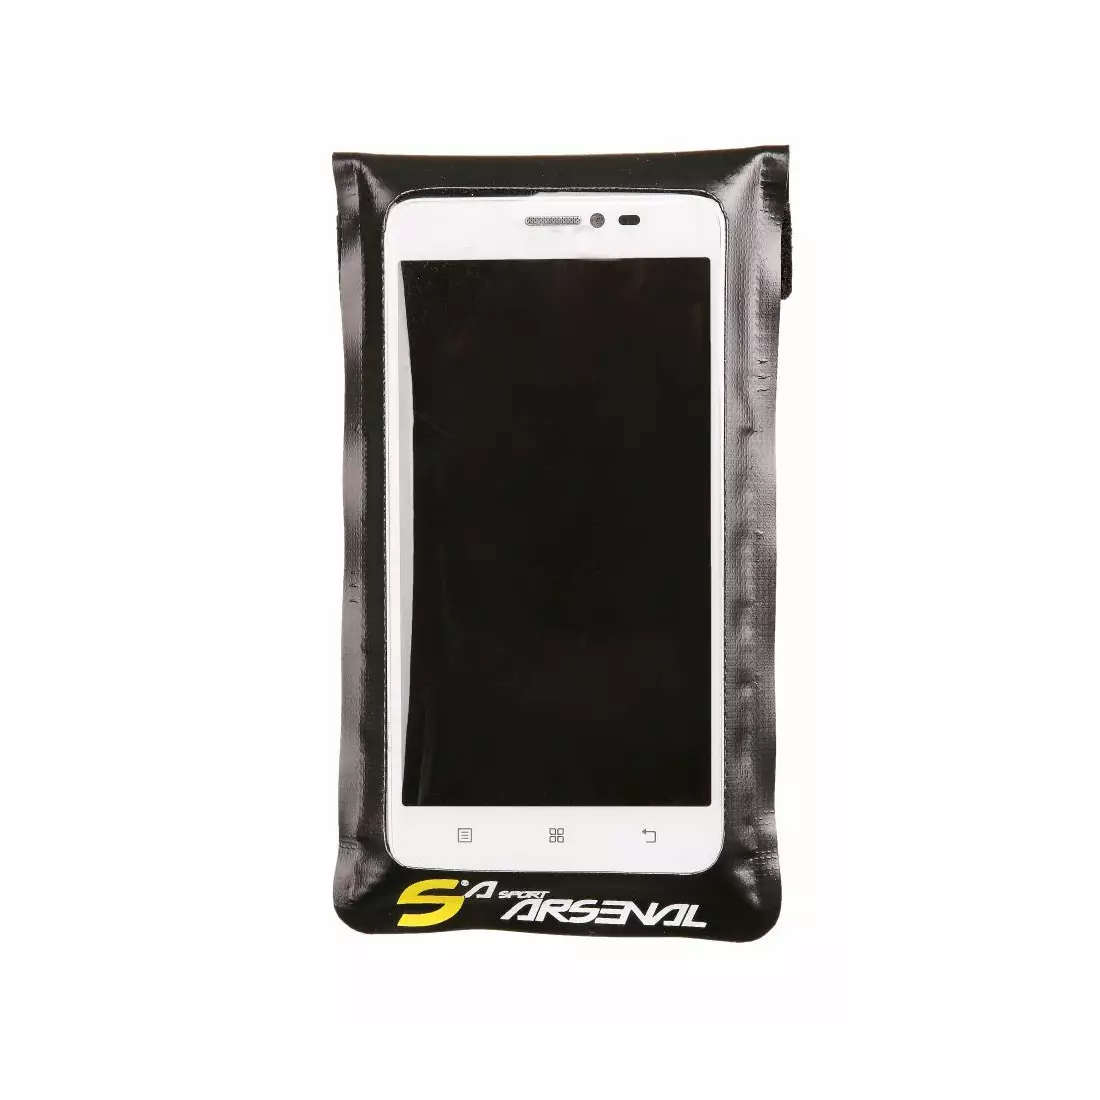 SPORT ARSENAL 530 Pouzdro na kolo pro smartphone malý 3,5'-4,5'